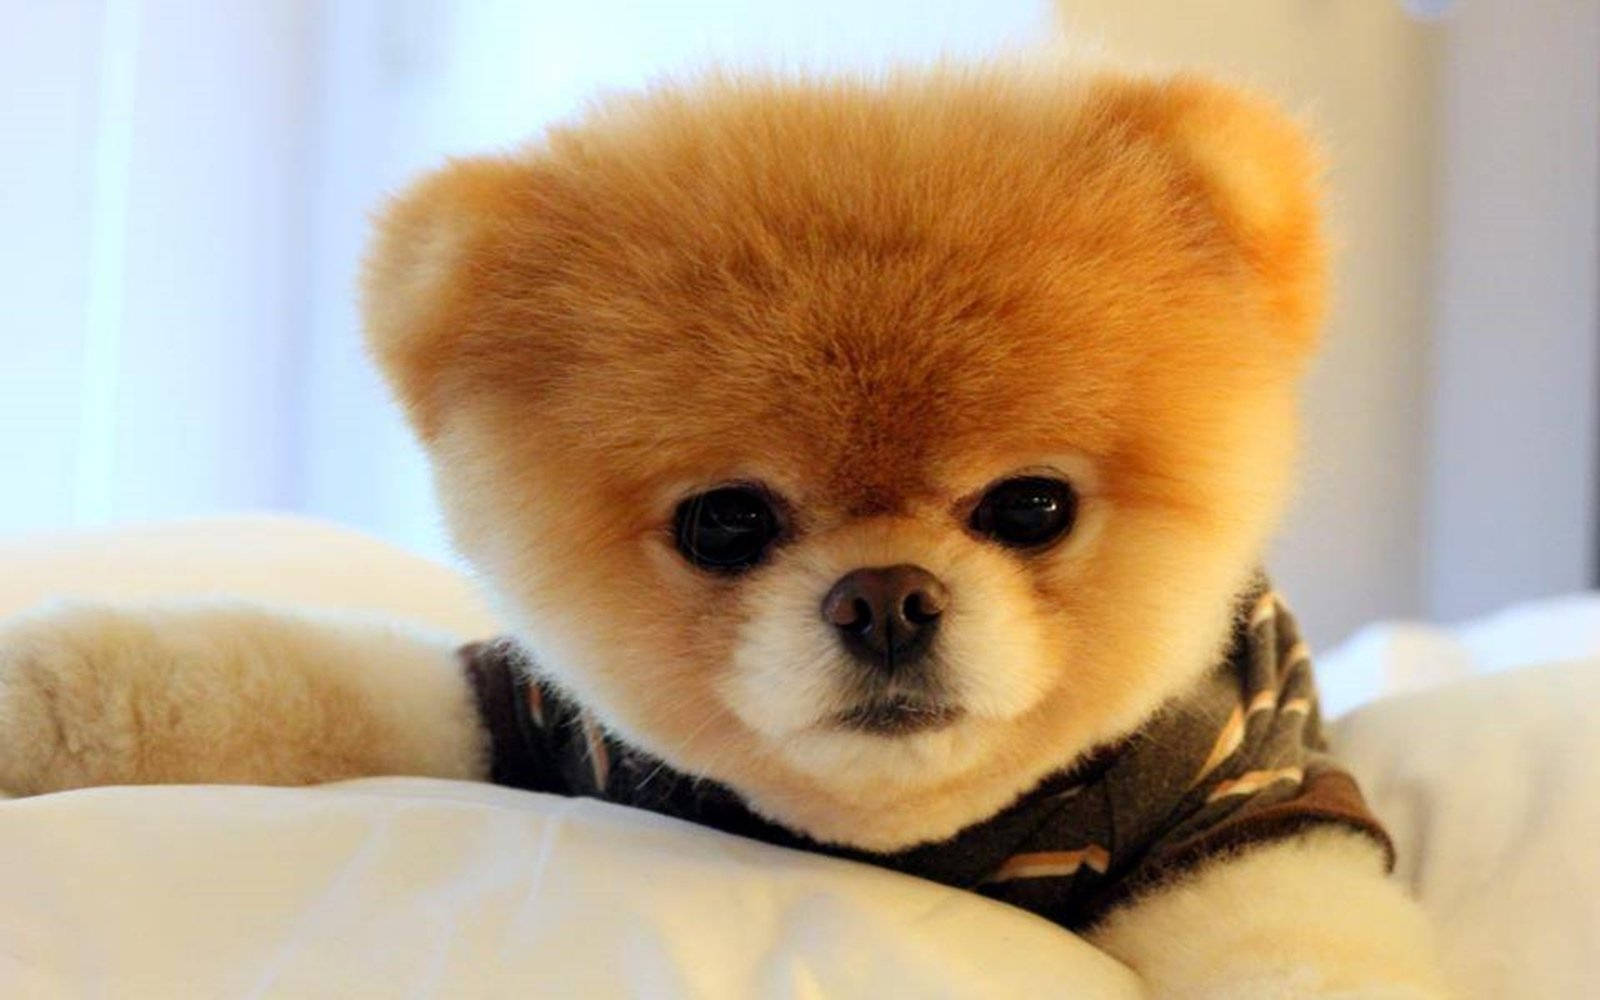 Beanie Boos-looking Pomeranian